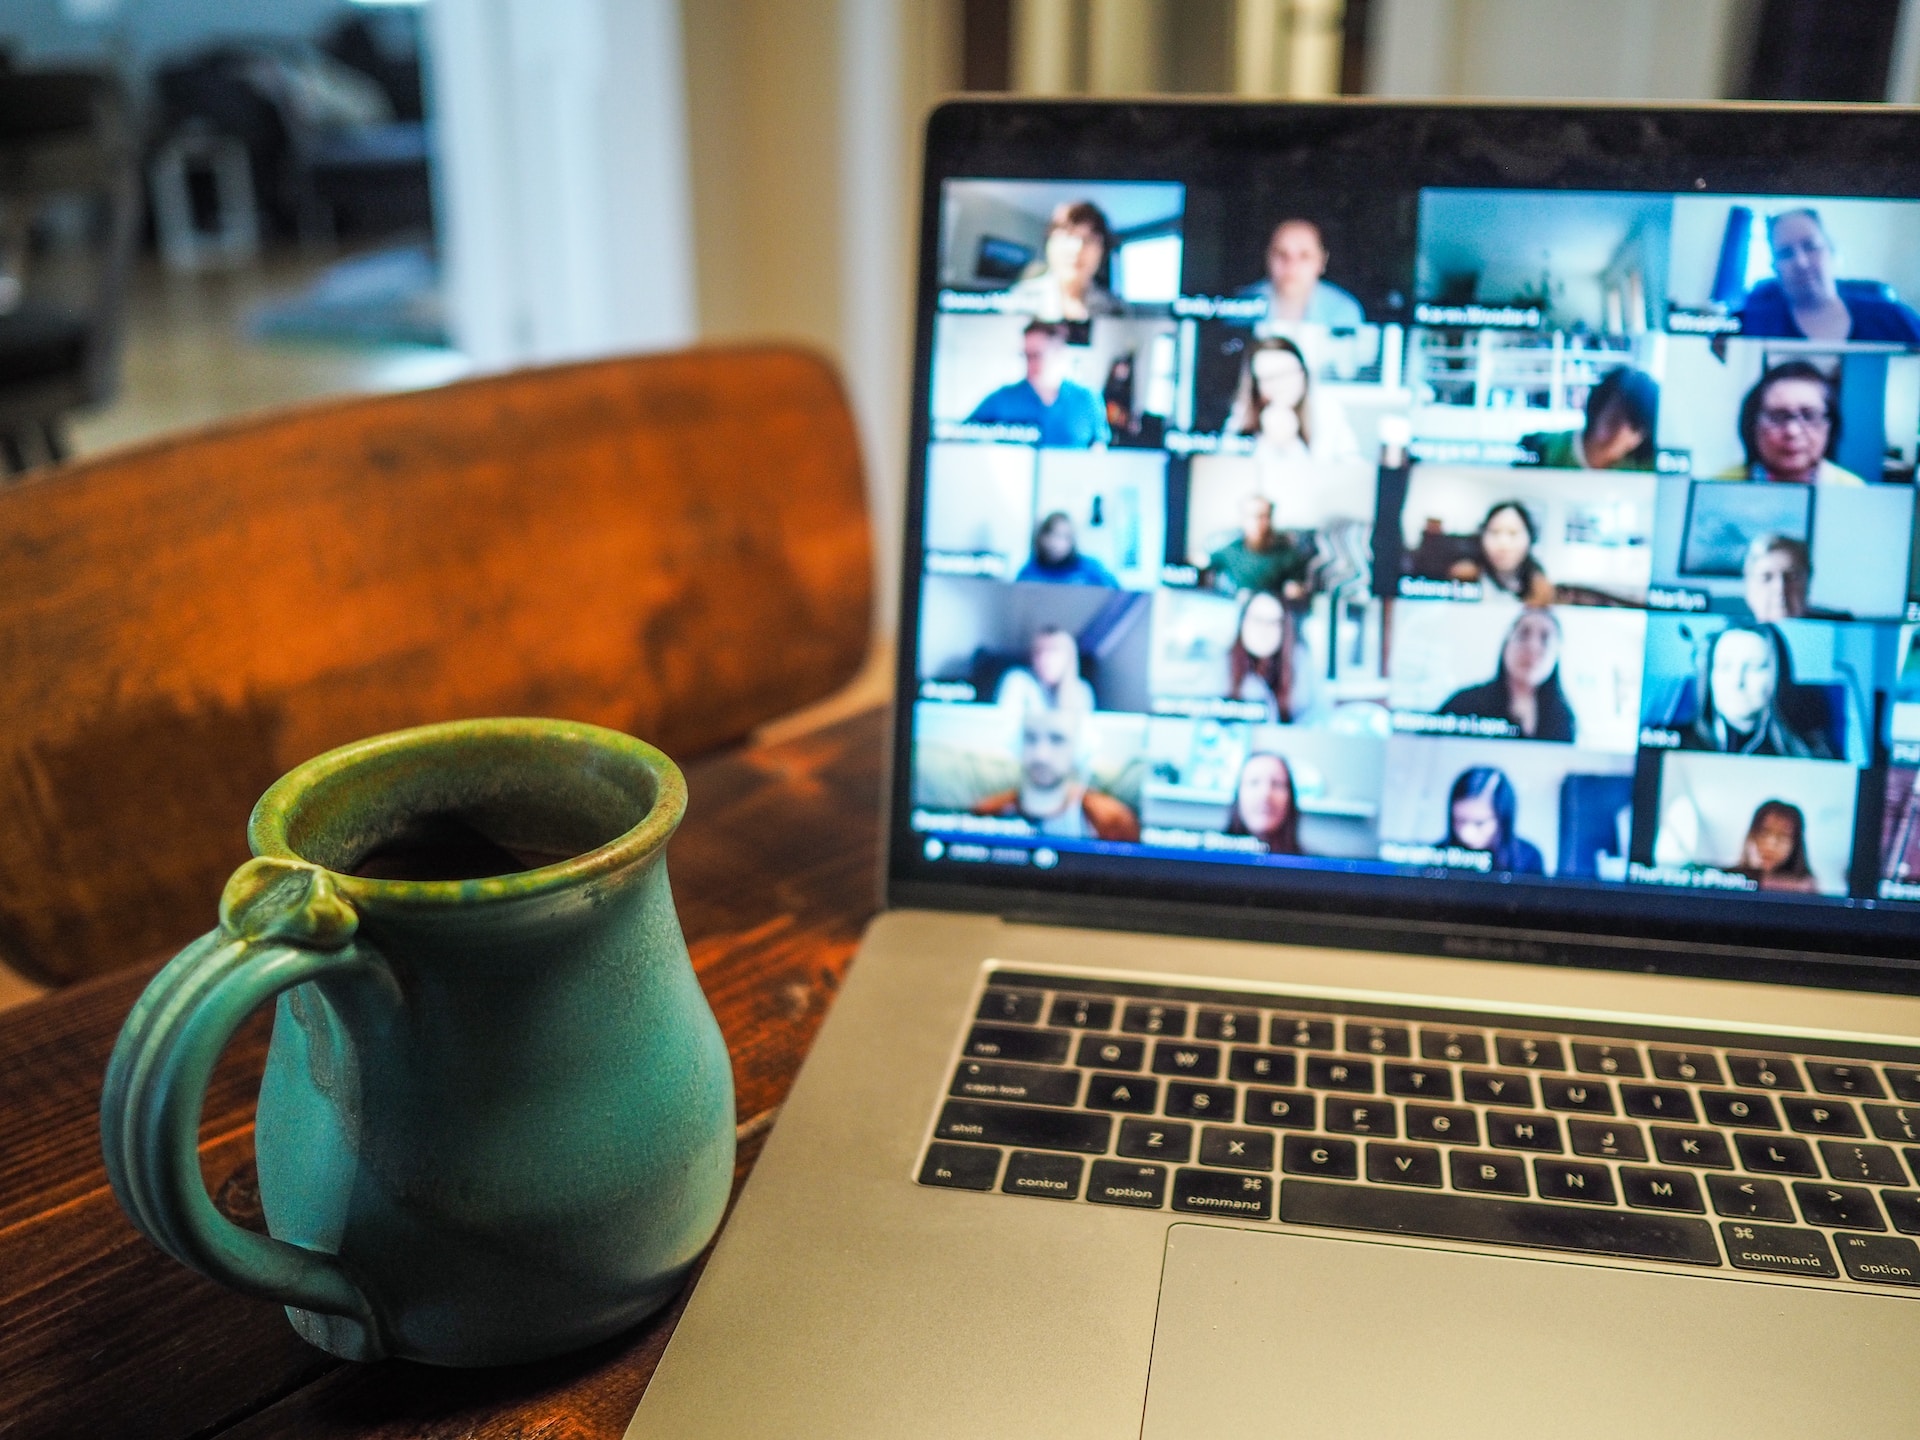 Zoom meeting on MacBook with blue mug on table. 